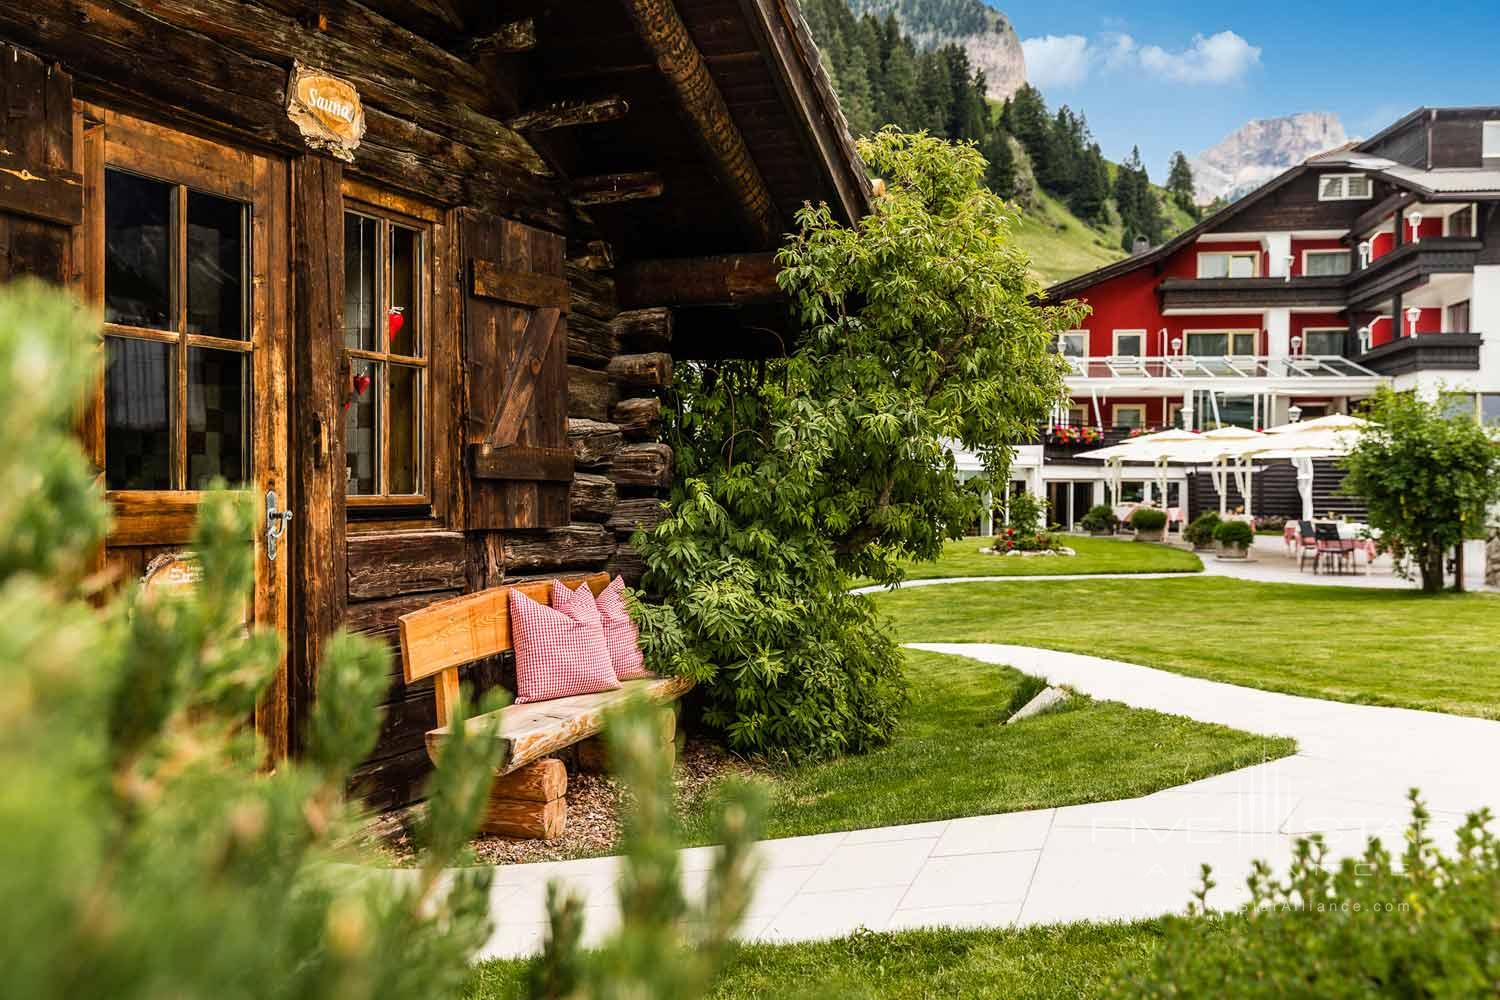 AlpenRoyal Grand Hotel, Selva Val Gardena, BZ, Italy